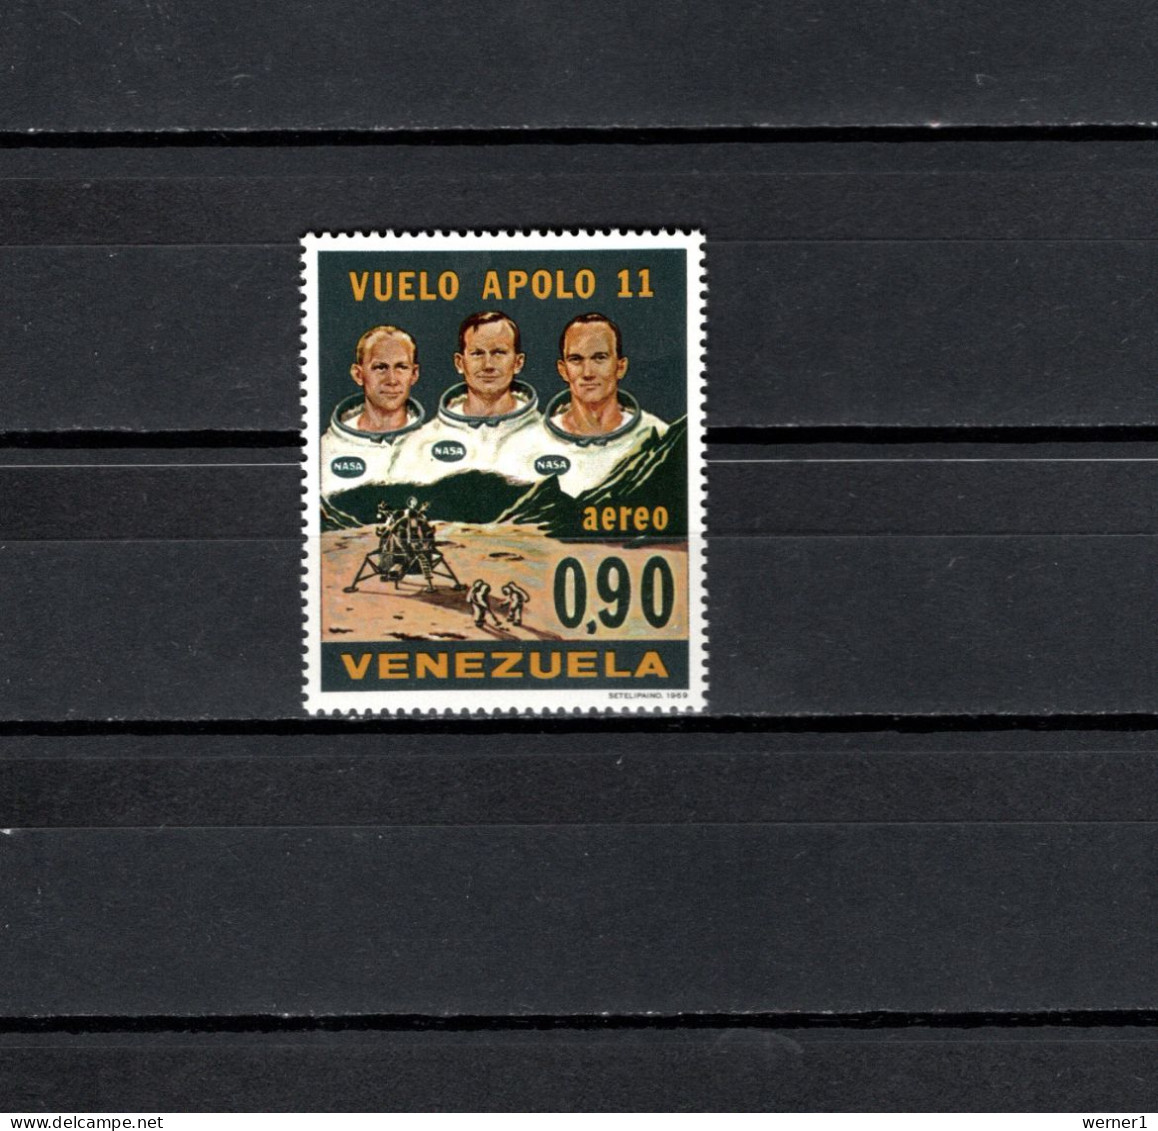 Venezuela 1969 Space, Apollo 11 Moonlanding Stamp MNH - América Del Sur